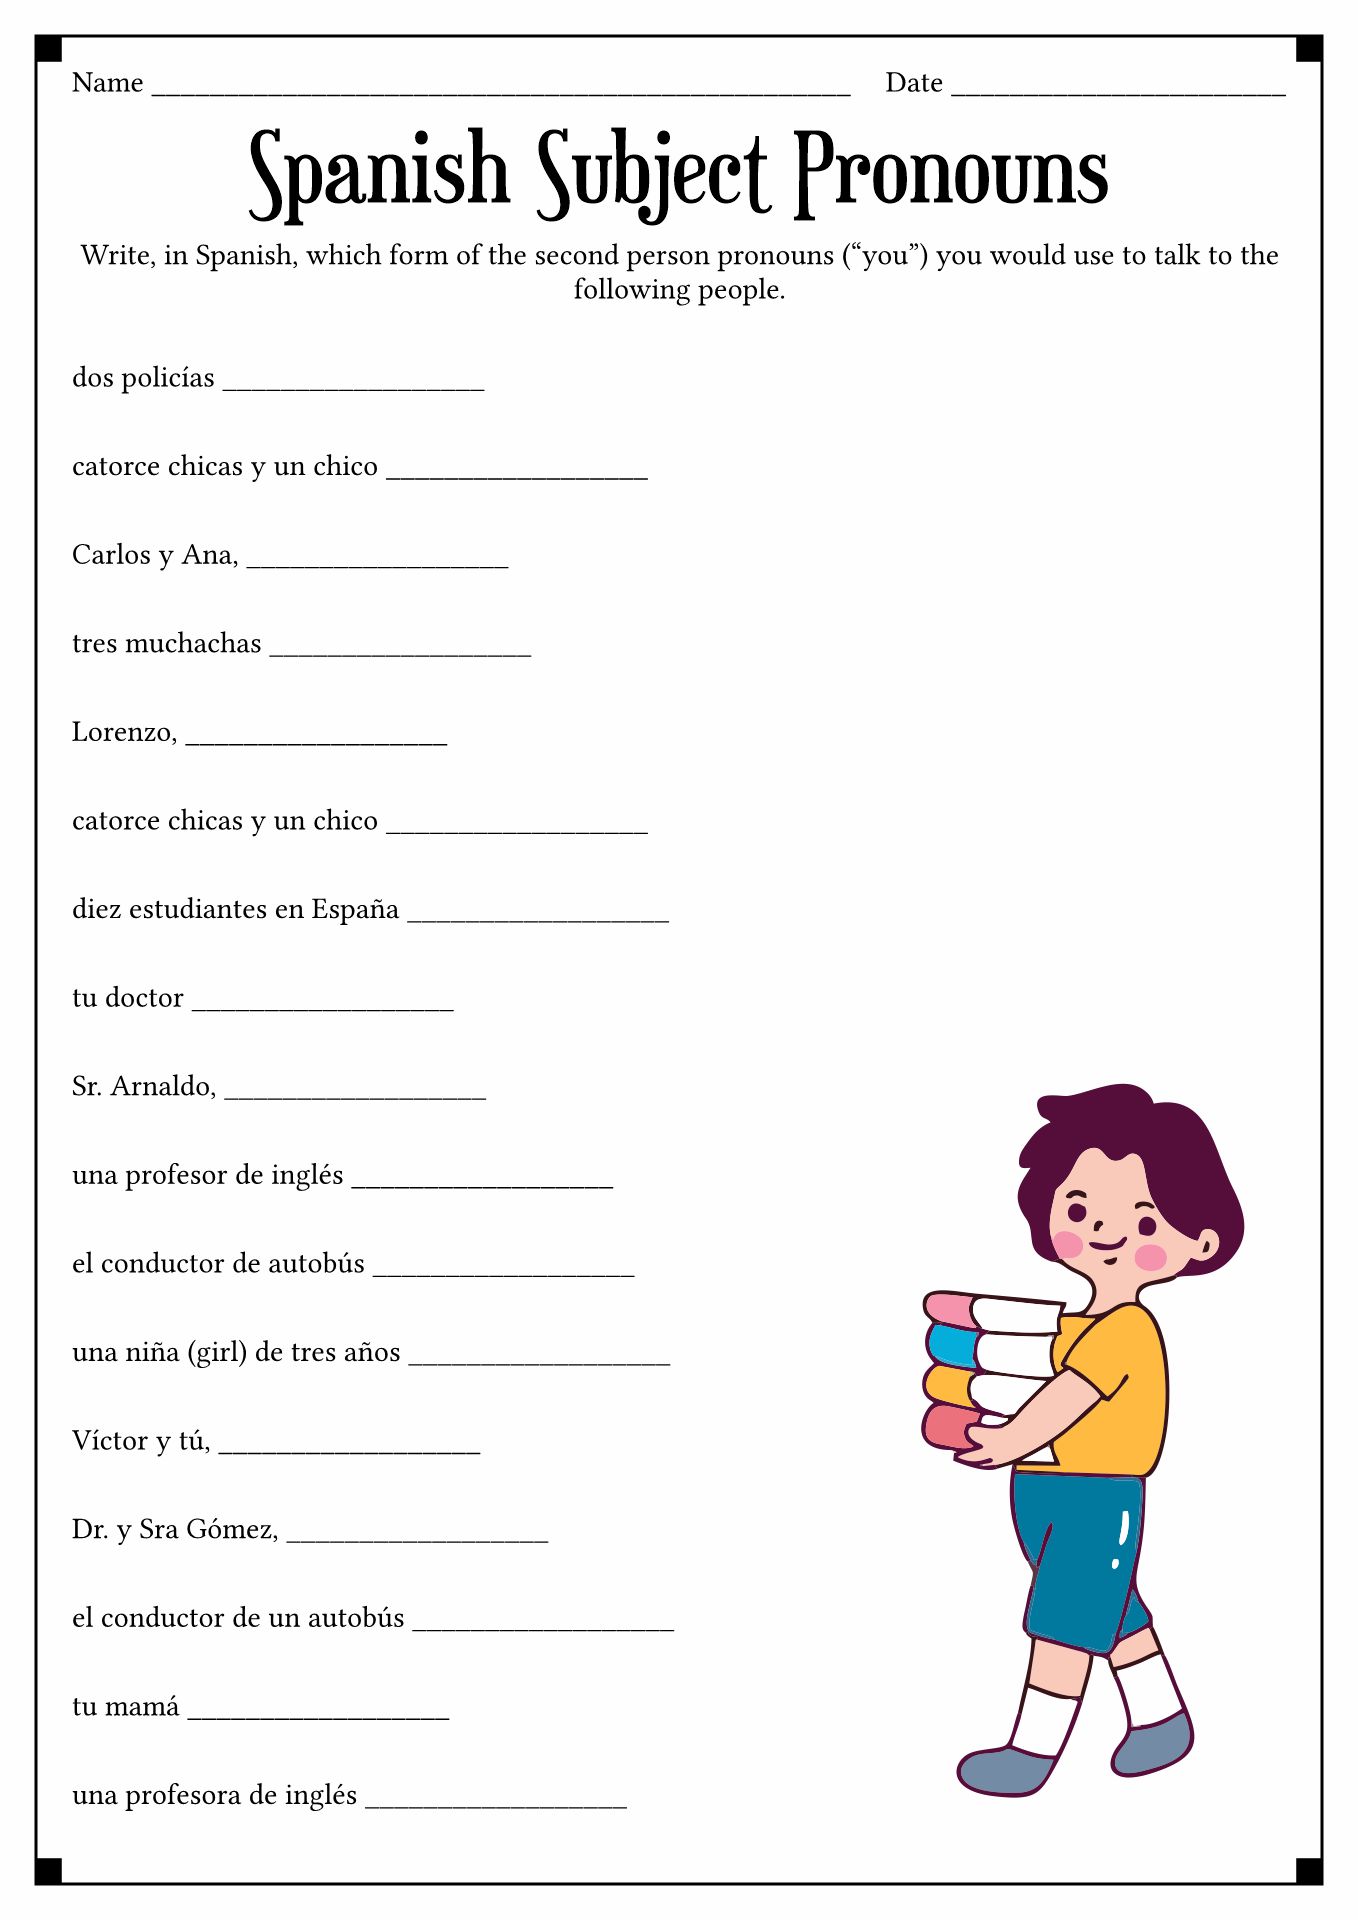 Spanish Subject Pronouns Worksheet